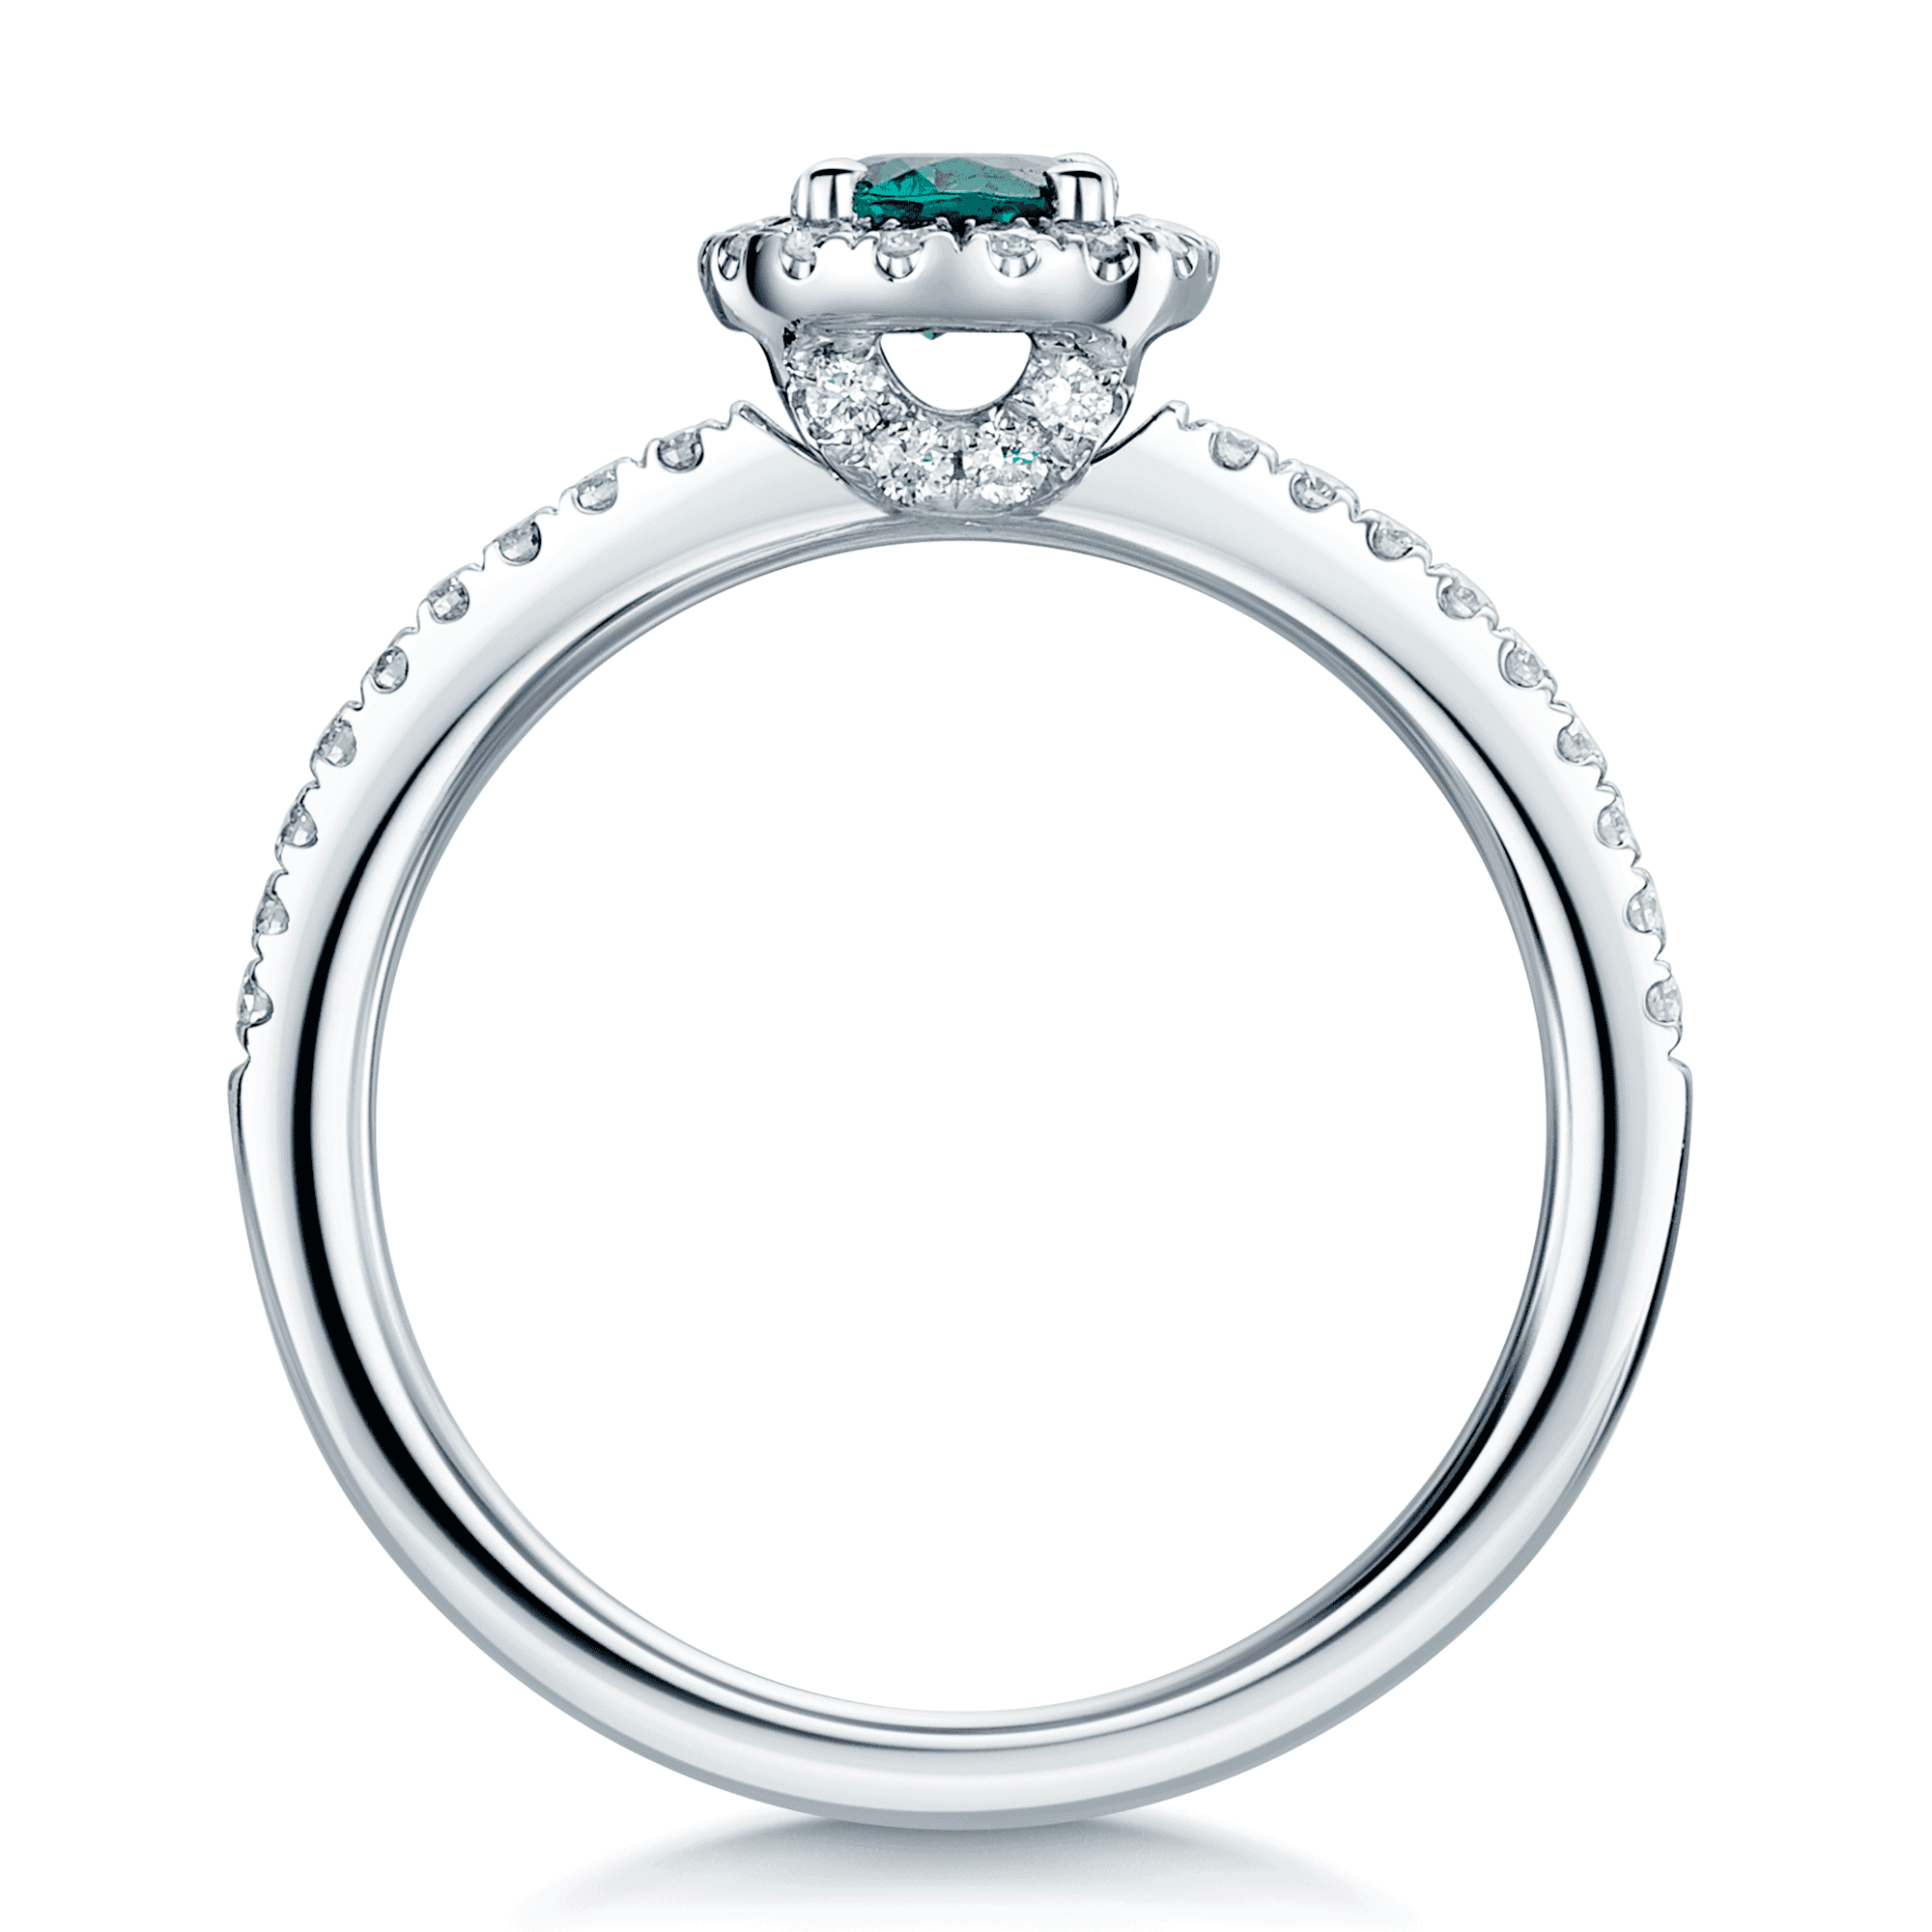 Platinum Oval Cut Columbian Emerald In A Diamond Halo Setting With Diamond Set Shoulders